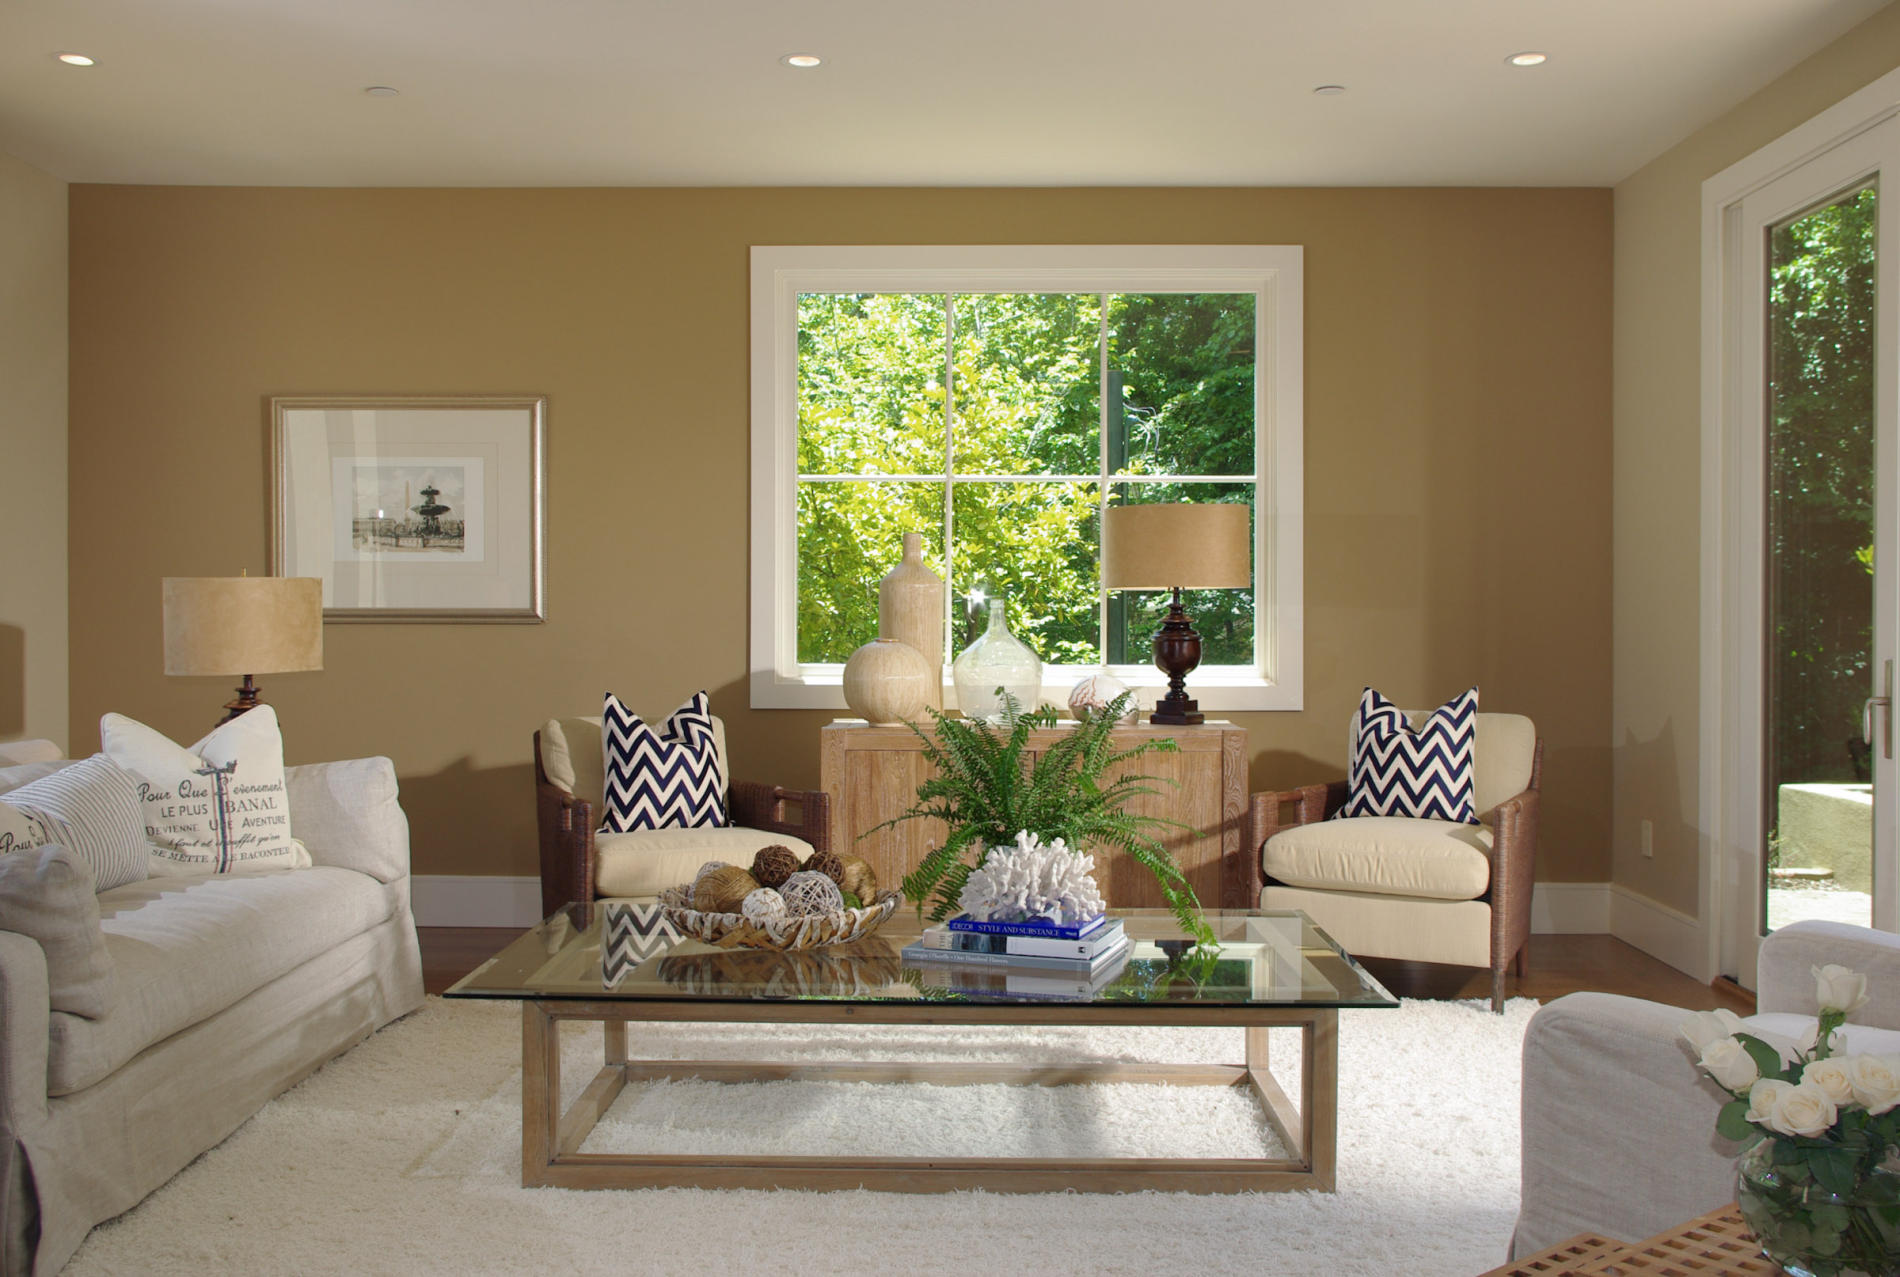 Ideas for Shabby Chic Living Room - Interior Design ...